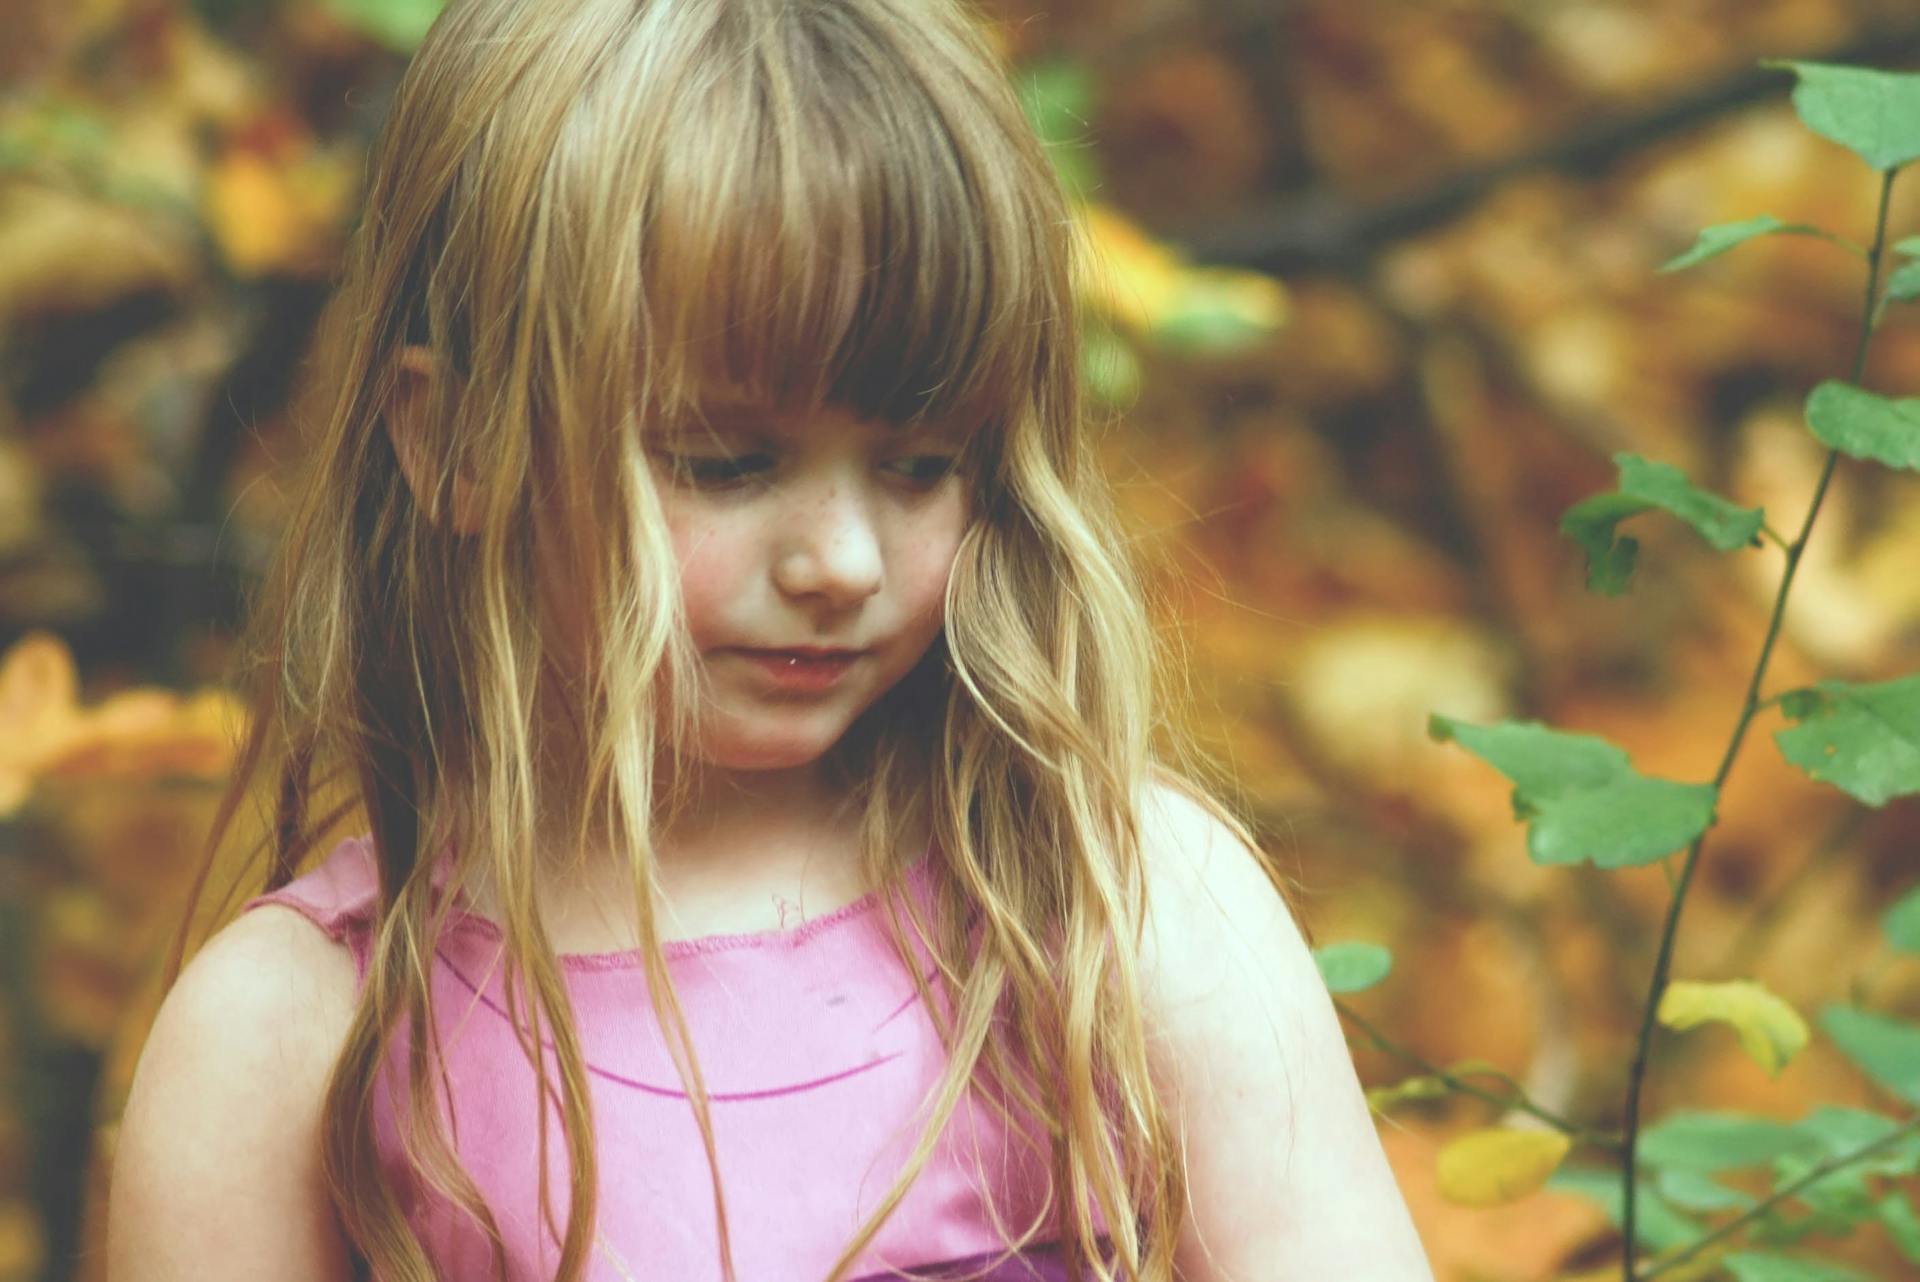 A sad little girl | Source: Pexels